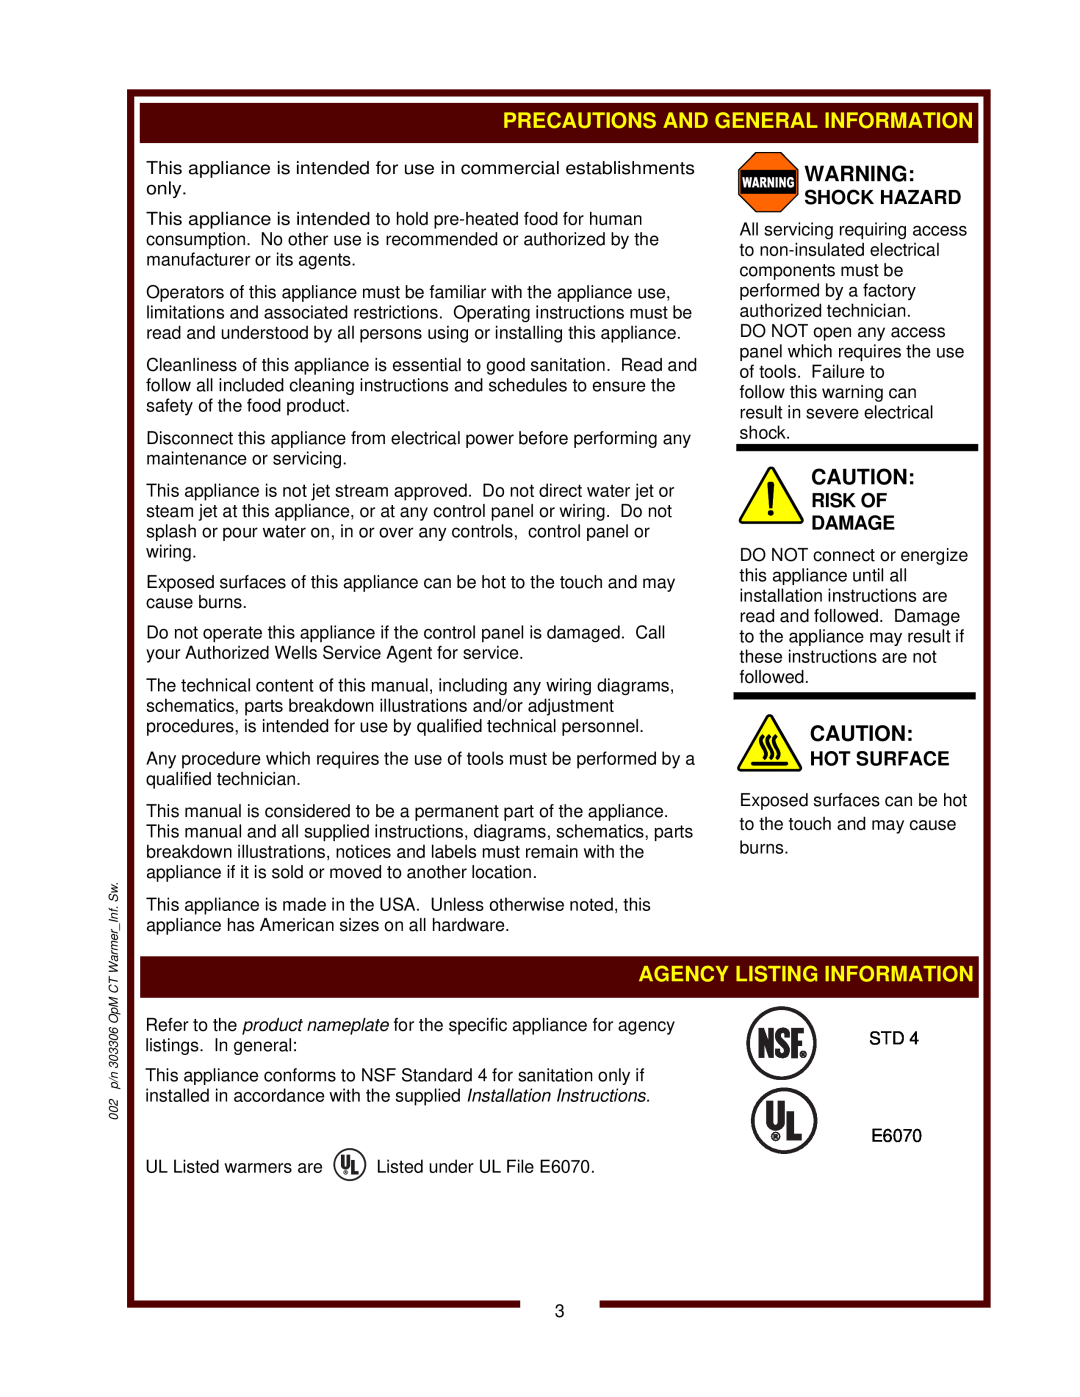 Wells SW-10 operation manual Agency Listing Information, Shock Hazard, Risk Of Damage, Hot Surface 